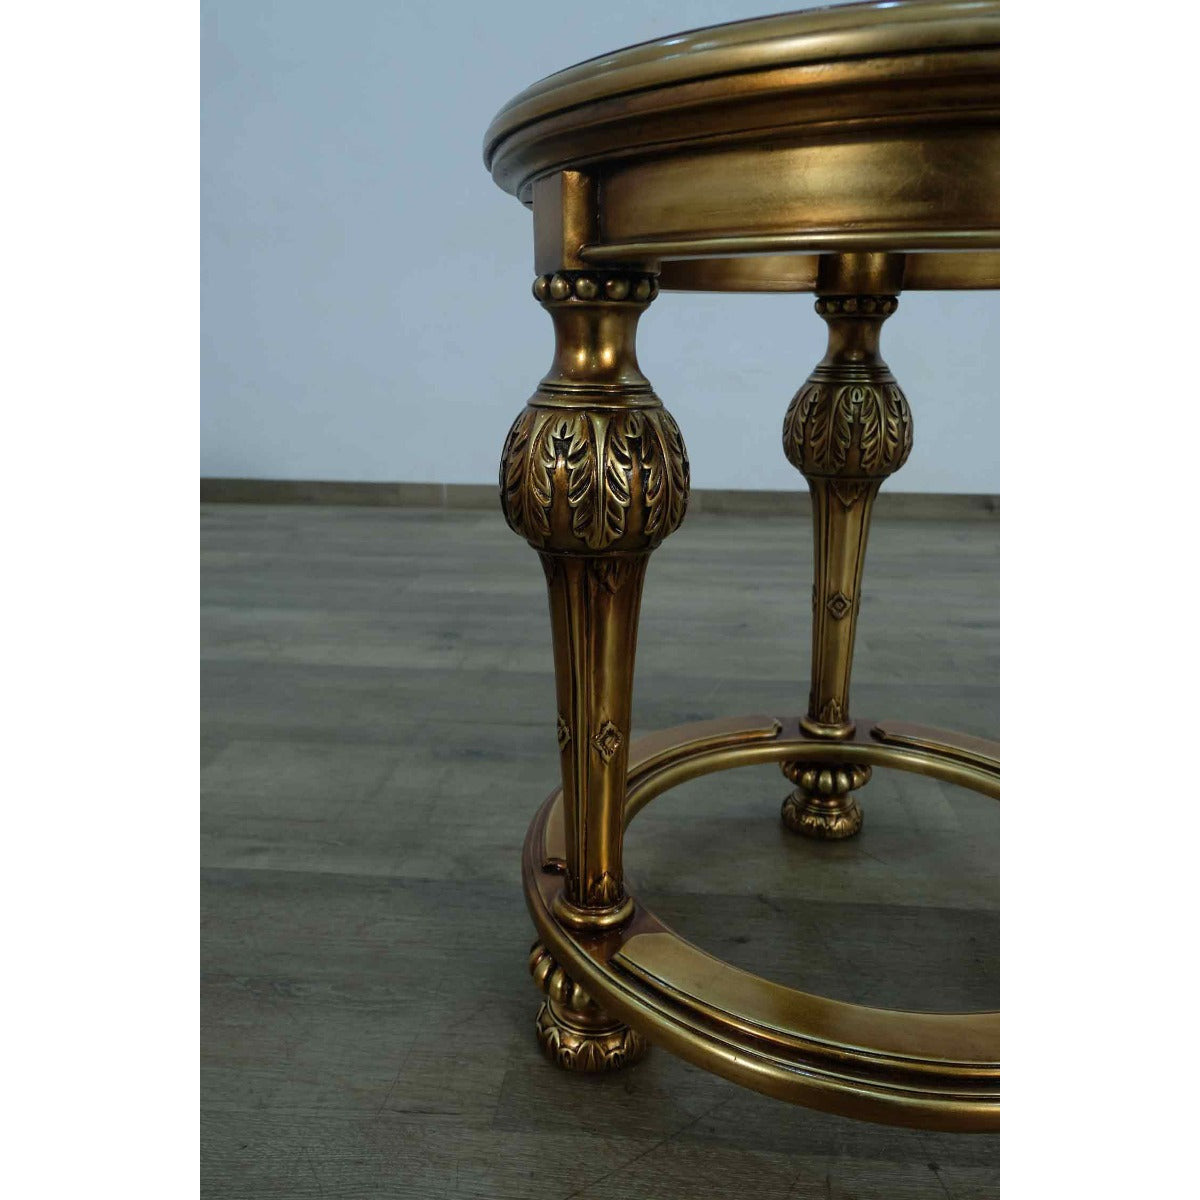 European Furniture - Bellagio End Table in Bronze- 30018-ET - New Star Living